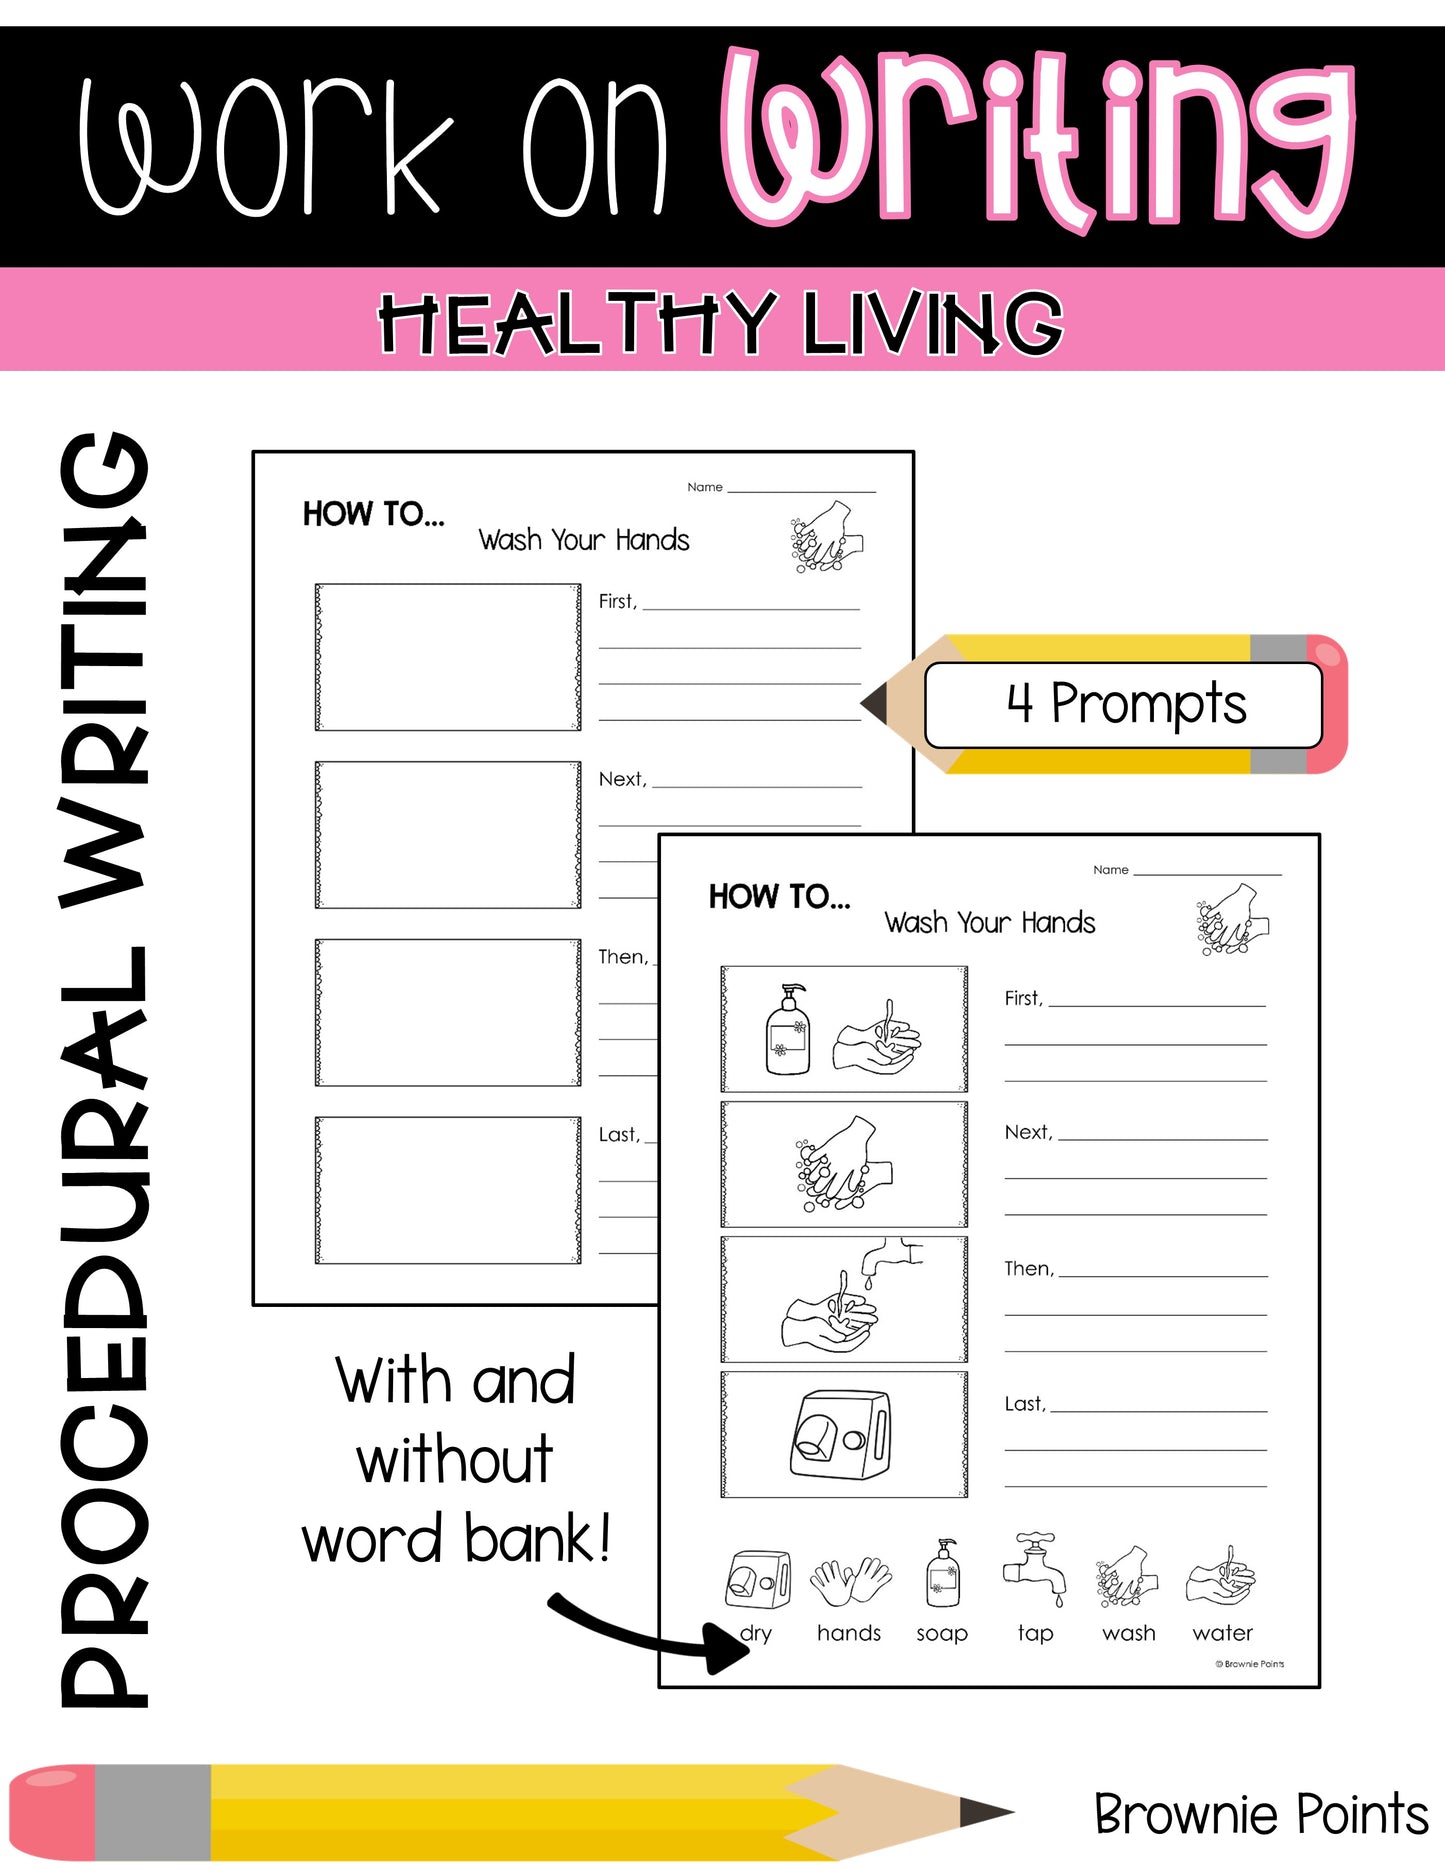 Work on Writing - Healthy Living (Grade 1)